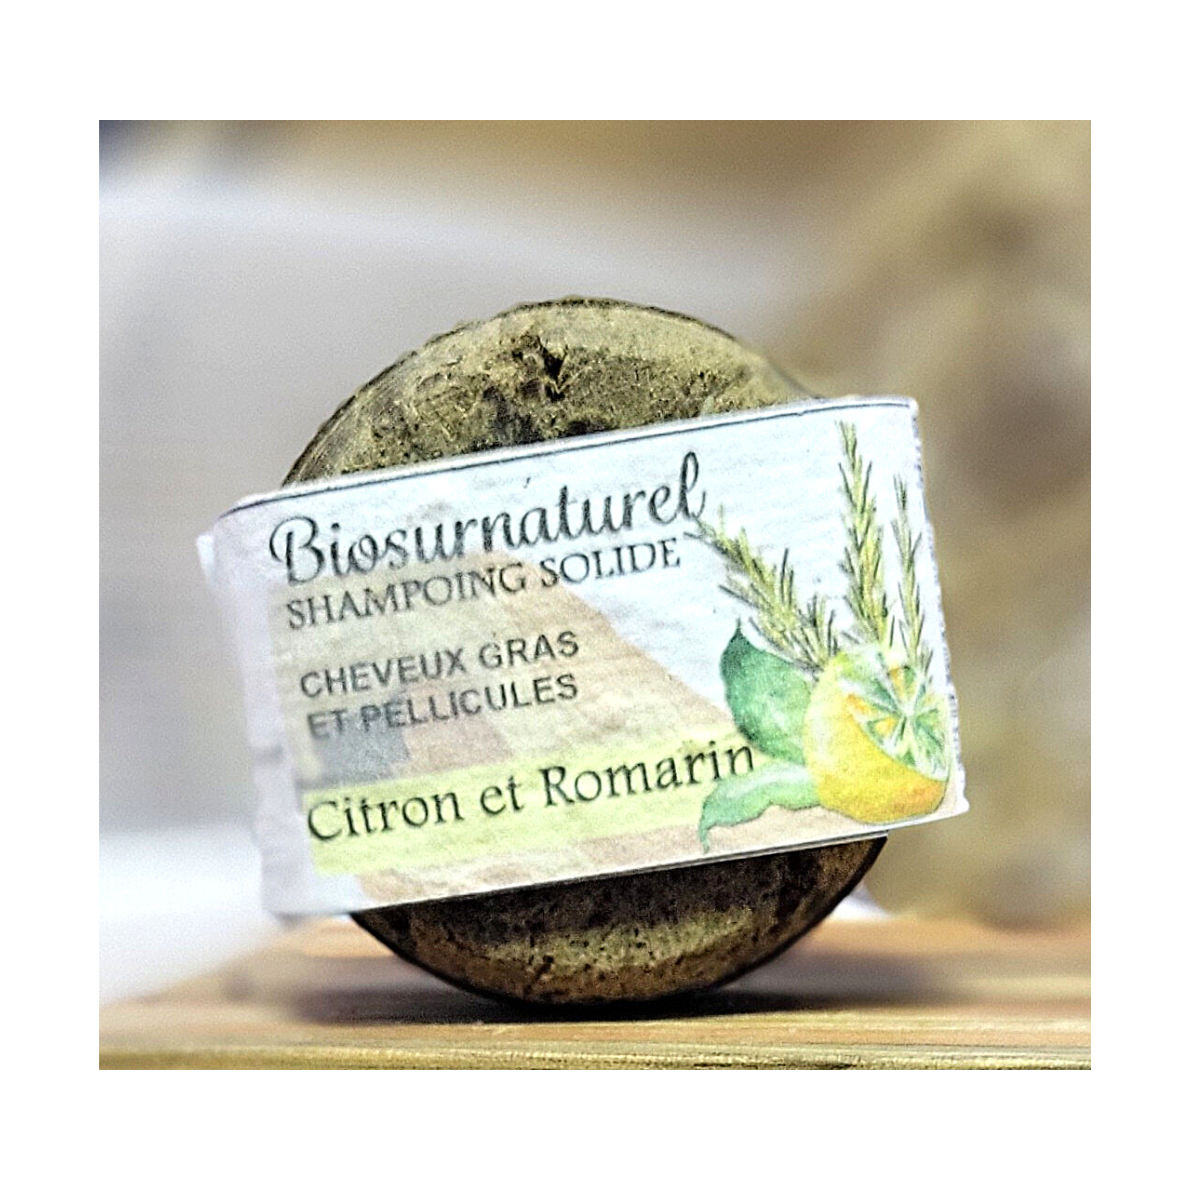 Shampoing Solide - Citron et Romarin - Cheveux Gras